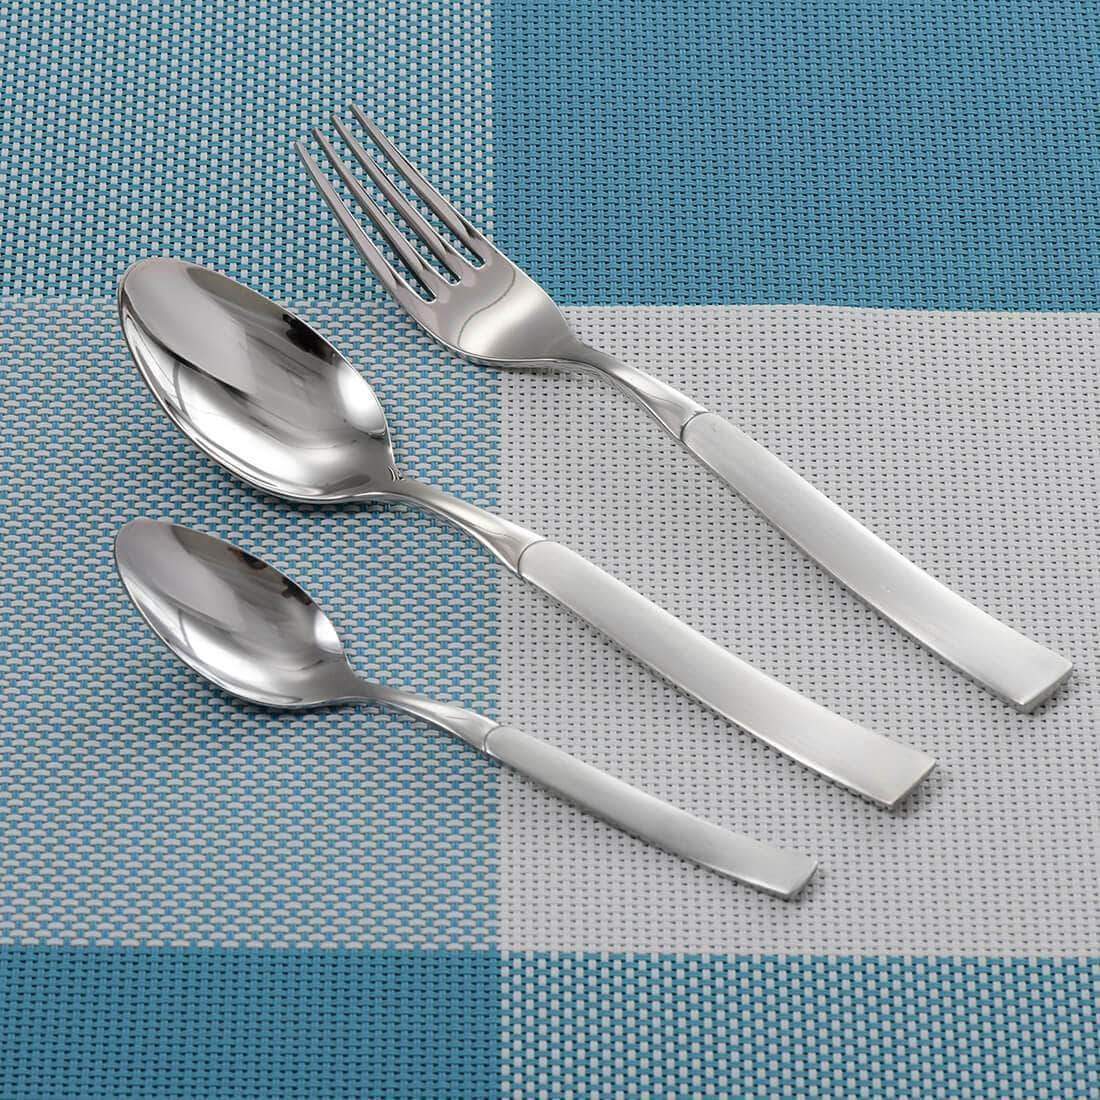 Jagdamba Cutlery Pvt Ltd. Cutlery 18 PCS Cutlery Set (without knife) - Jewel